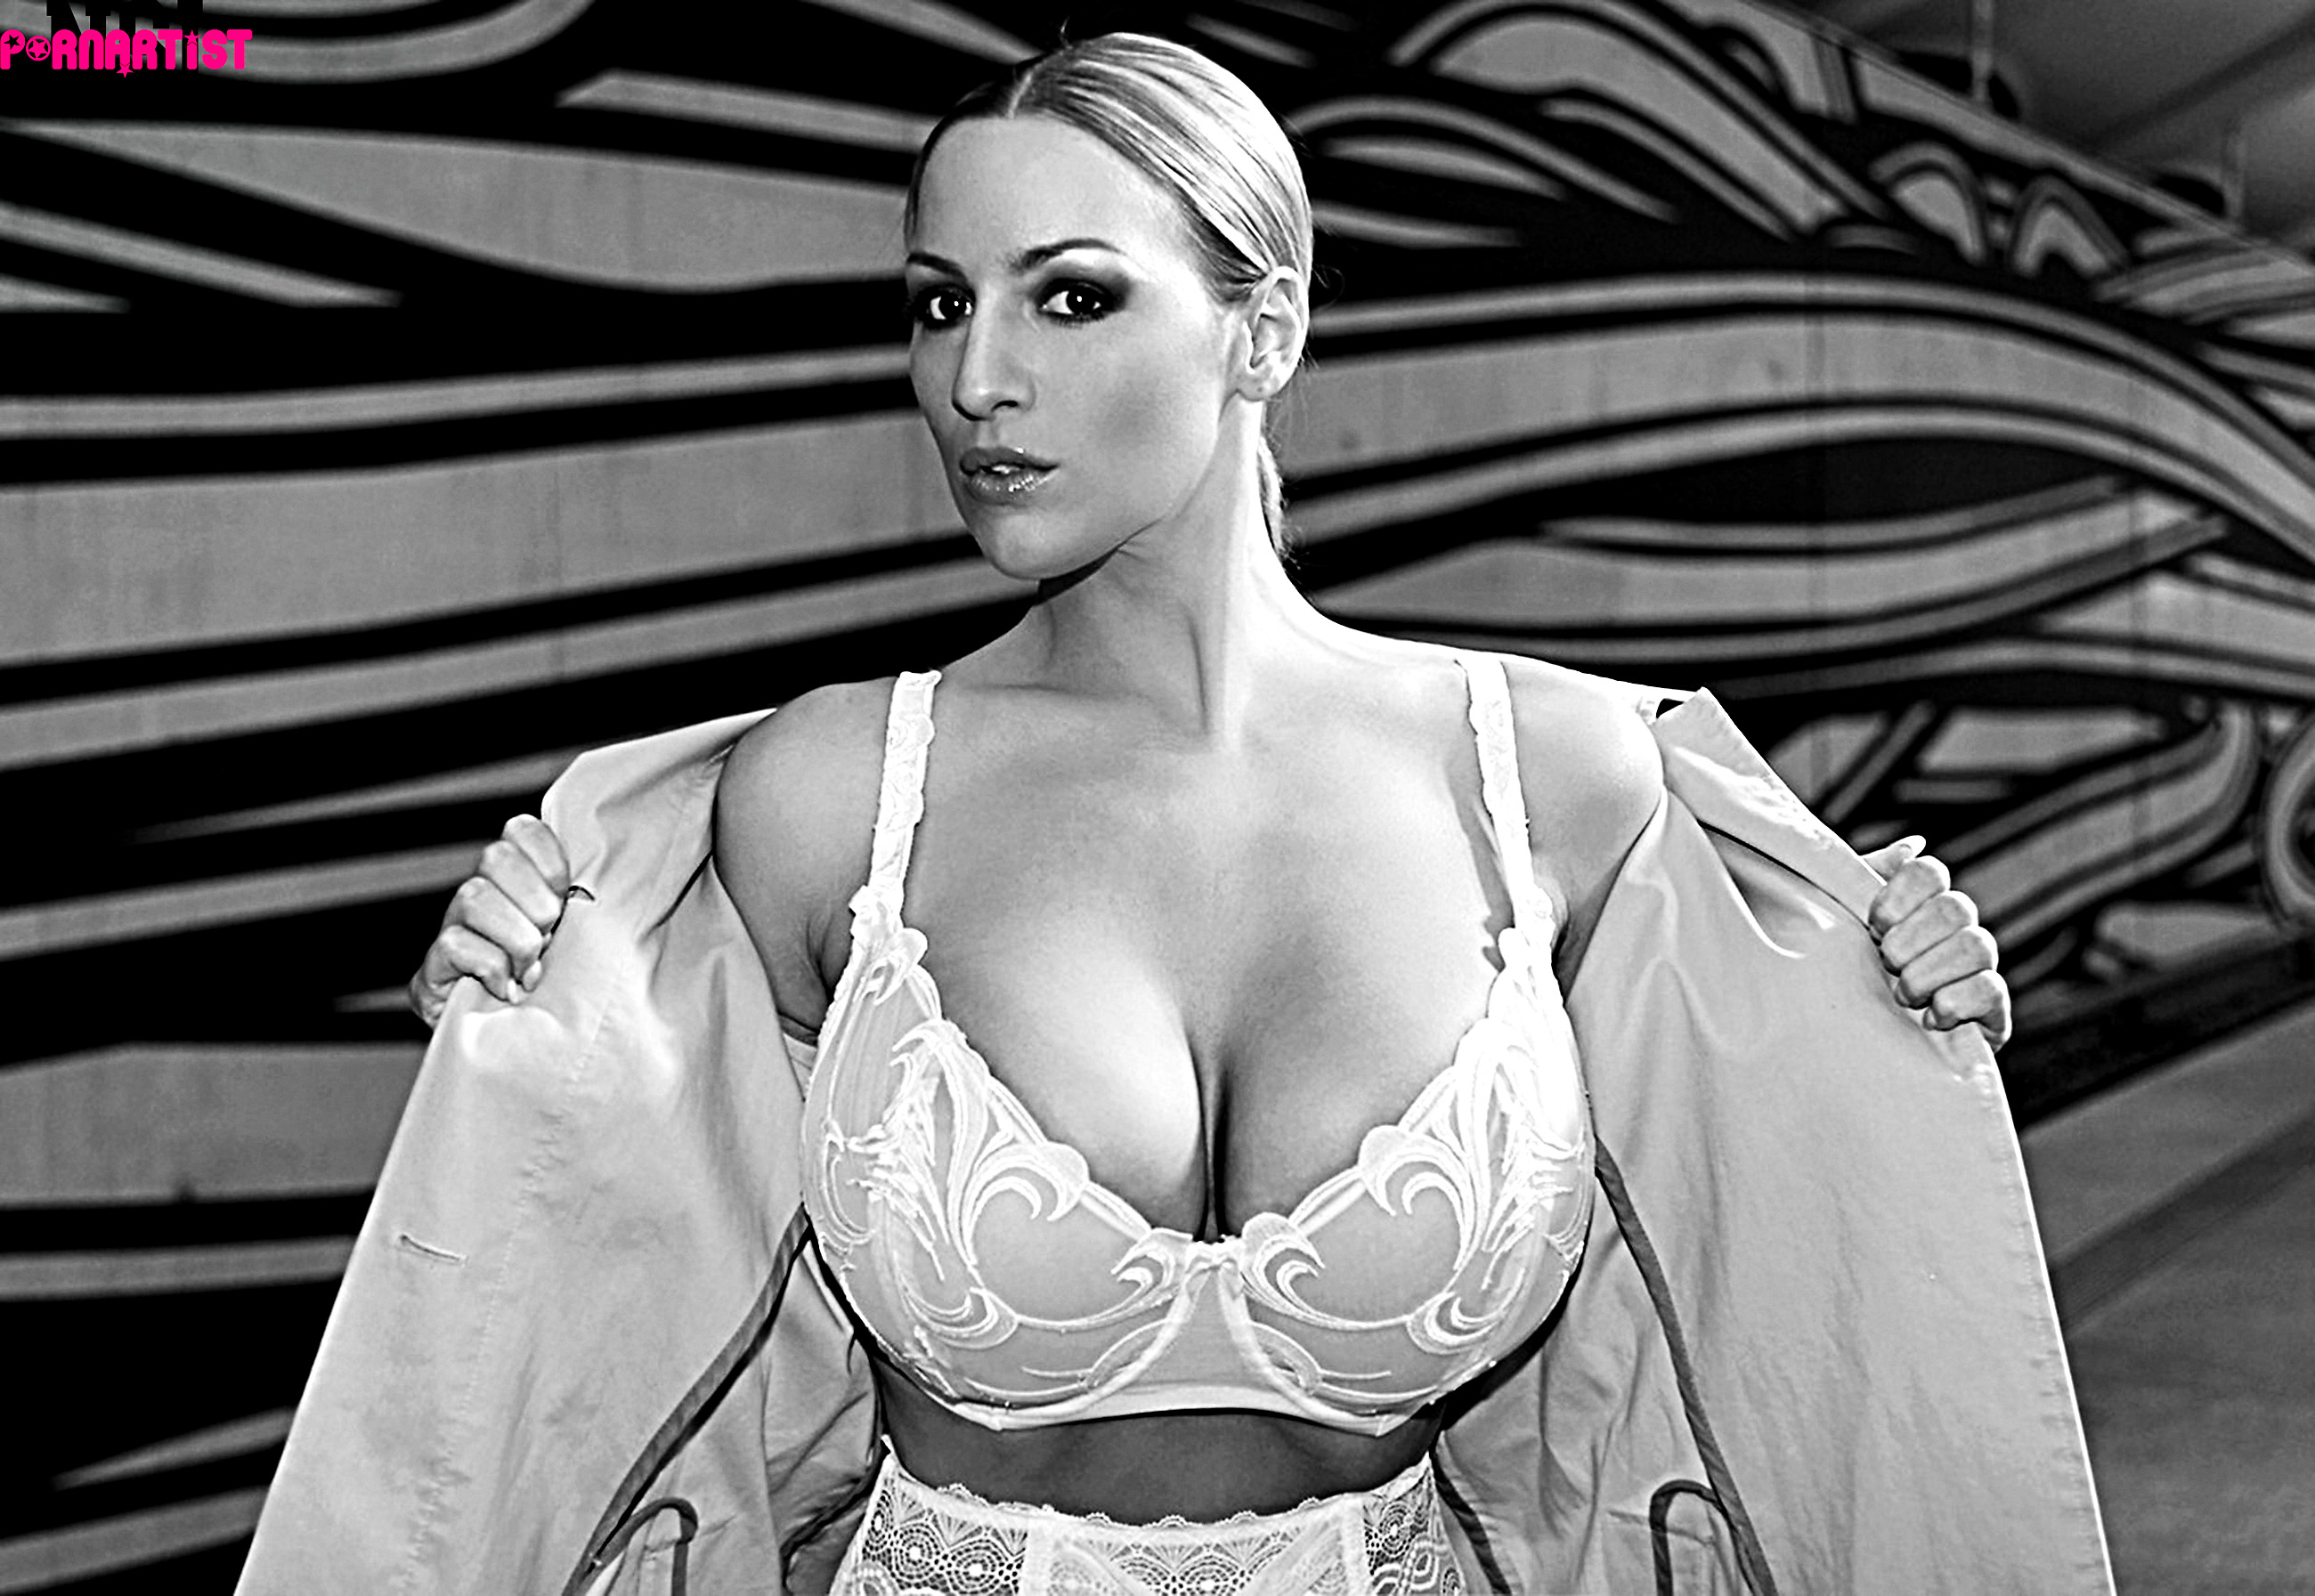 Black On White Big Tits - Jordan Carver busty big tits babe showing her bra in a black ...